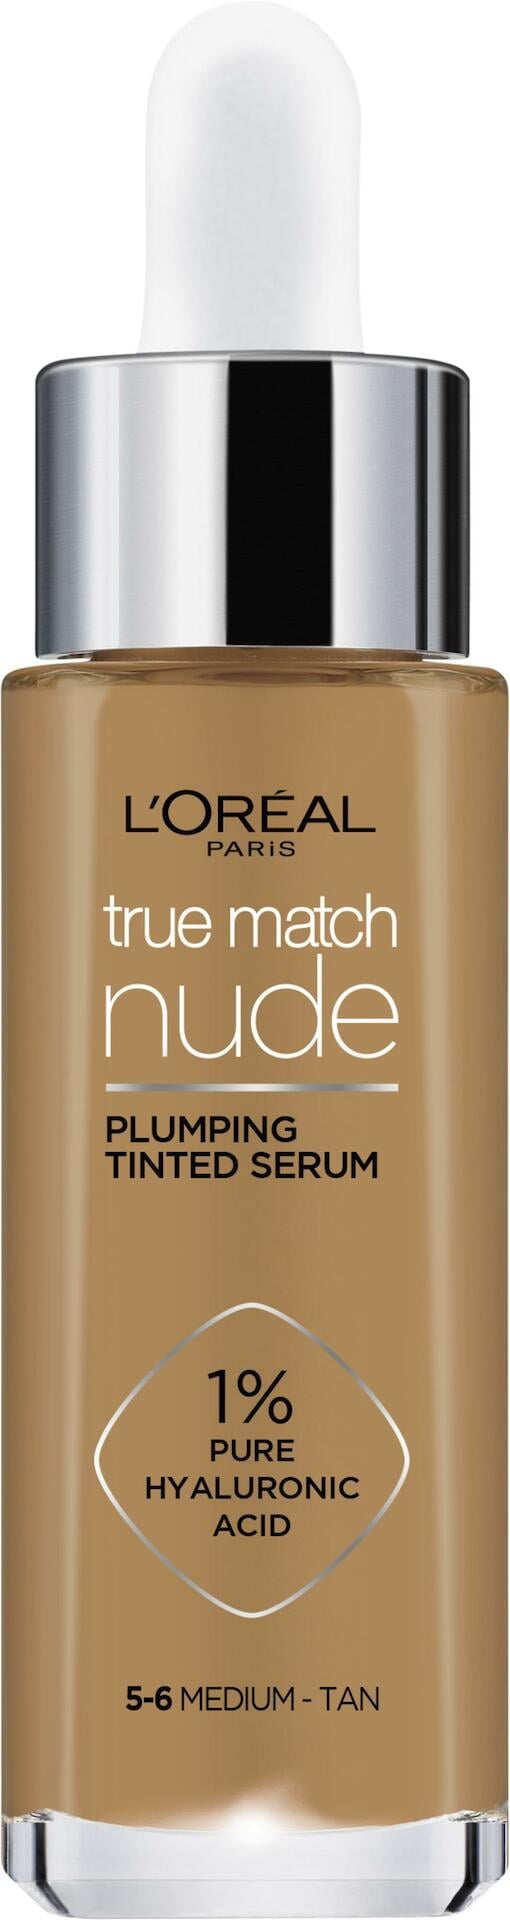 L'Oréal Paris True Match Nude Plumping Tinted Serum 5-6 Medium - Tan